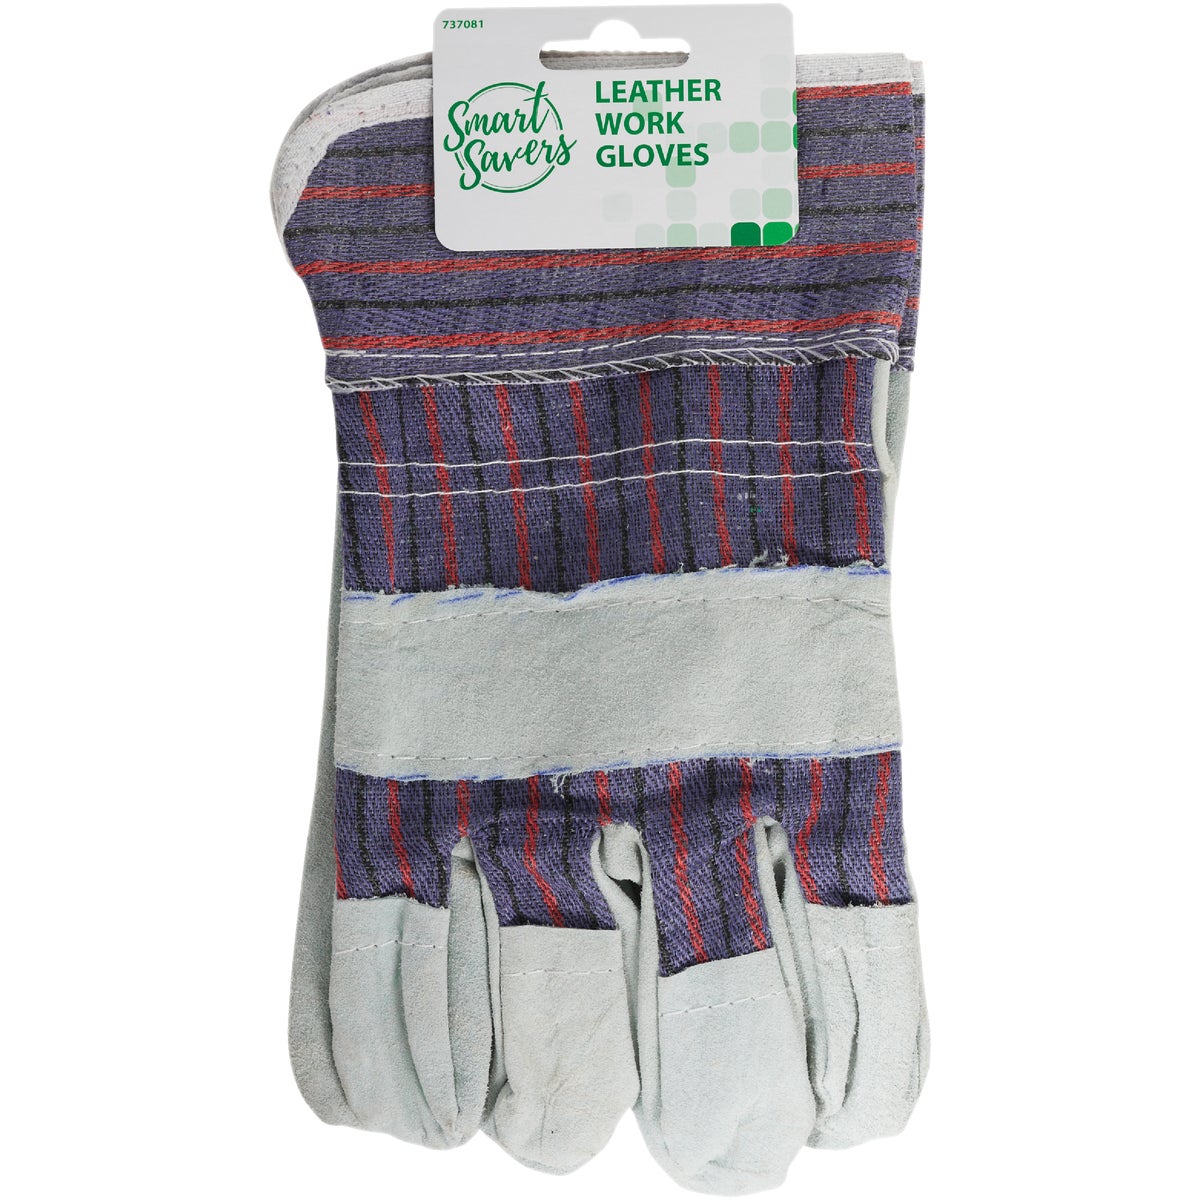 Item 737081, Smart Savers leather work gloves.